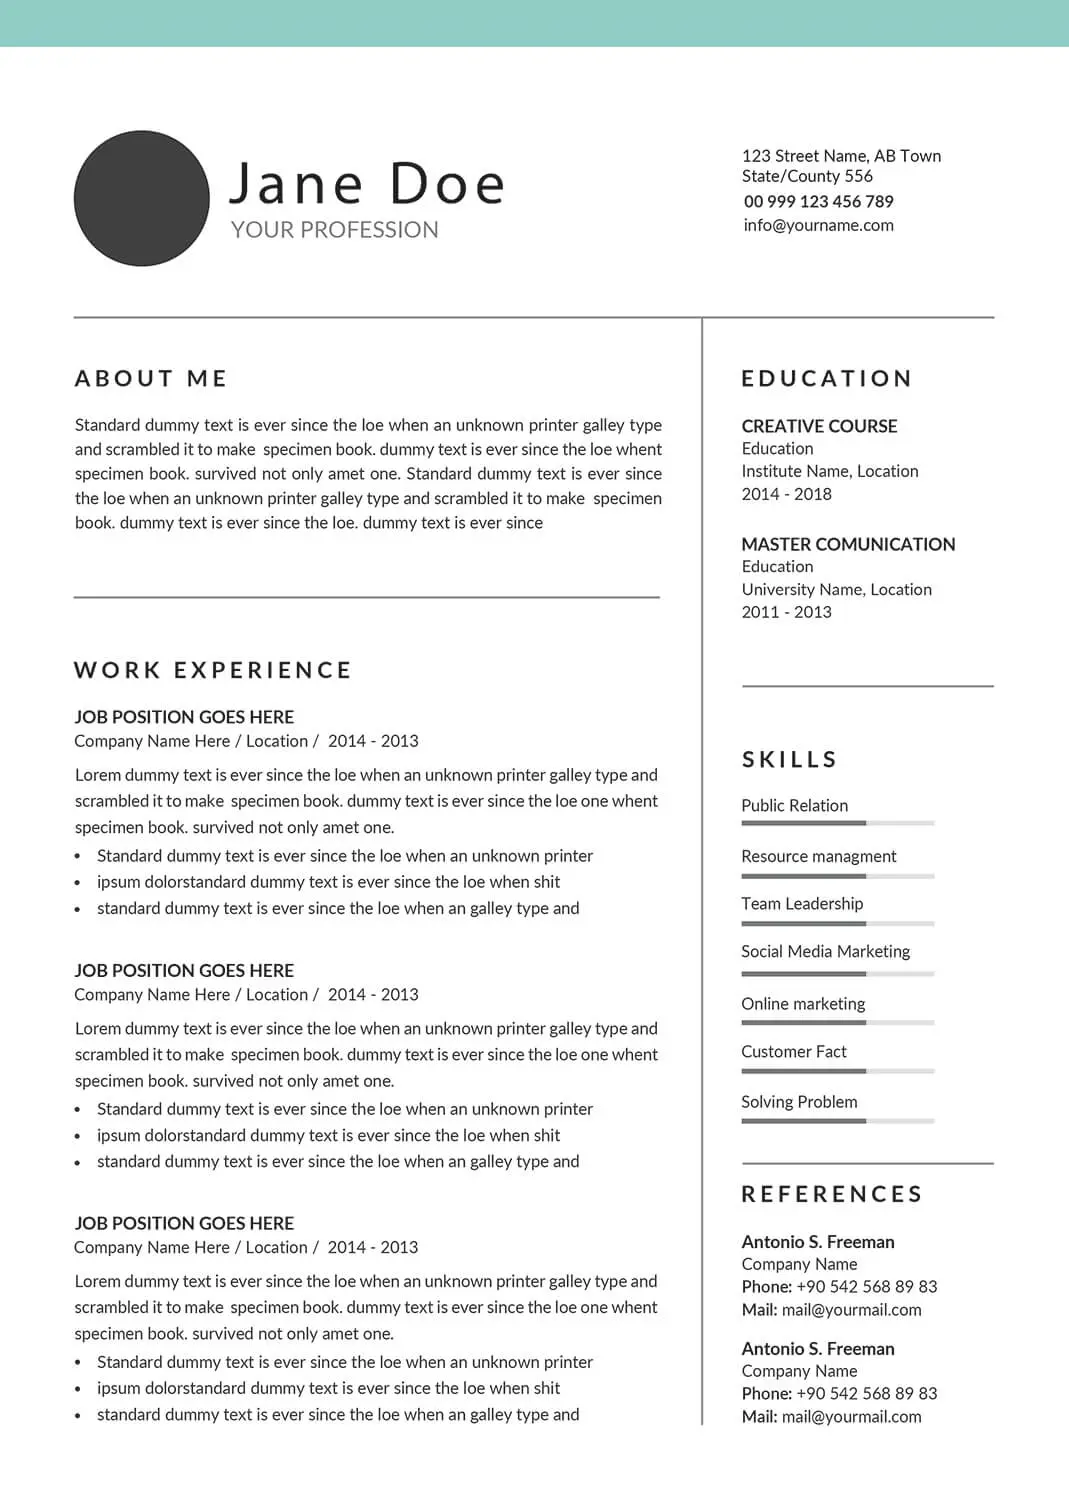 IT-specialist-resume